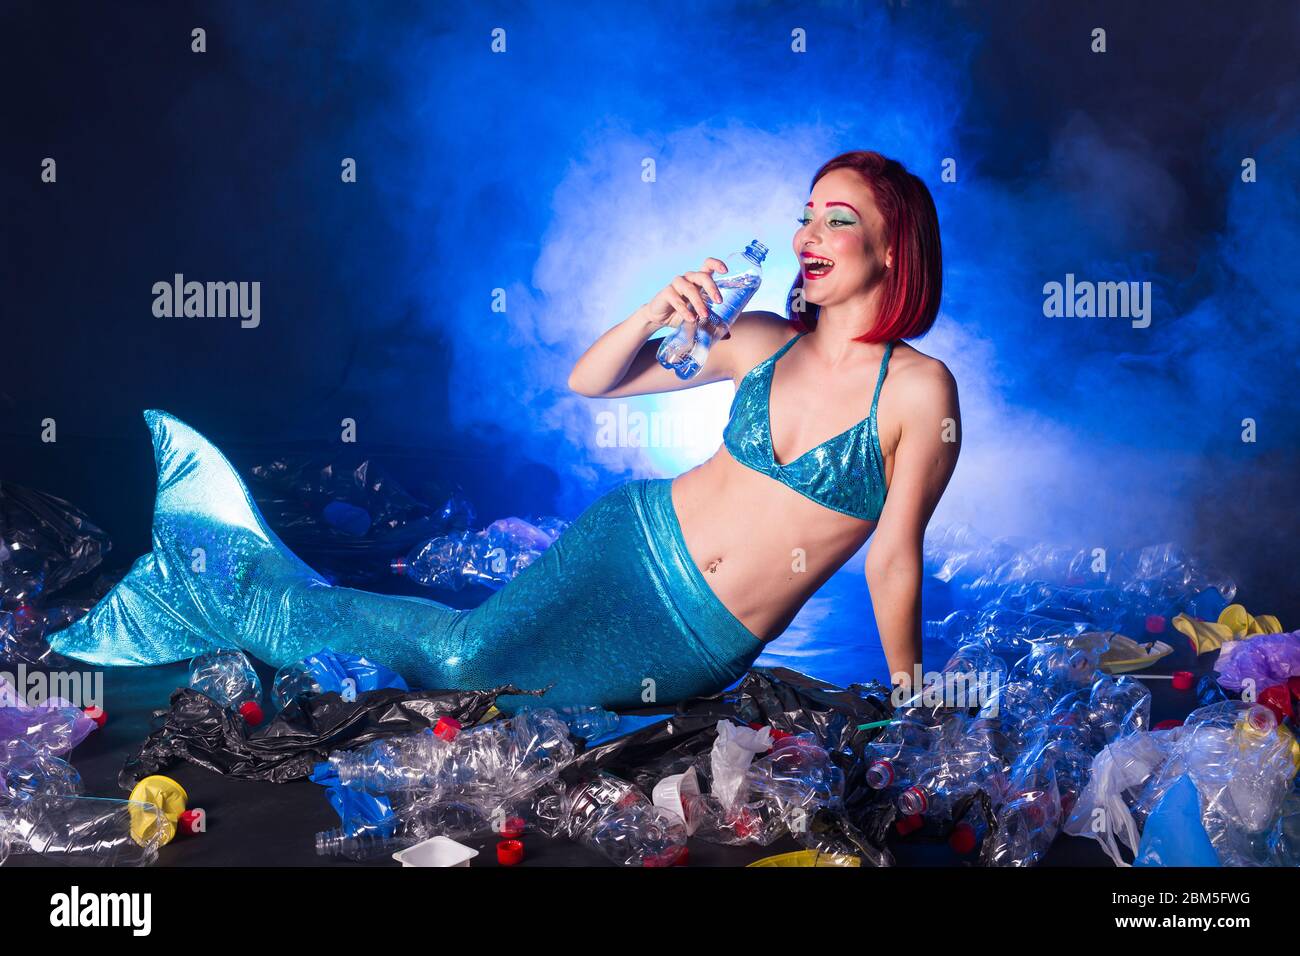 https://c8.alamy.com/comp/2BM5FWG/ocean-pollution-rubbish-in-the-water-stupid-fairytale-mermaid-in-dirty-ocean-plastic-trash-and-garbage-in-water-environmental-problem-plastic-bag-2BM5FWG.jpg